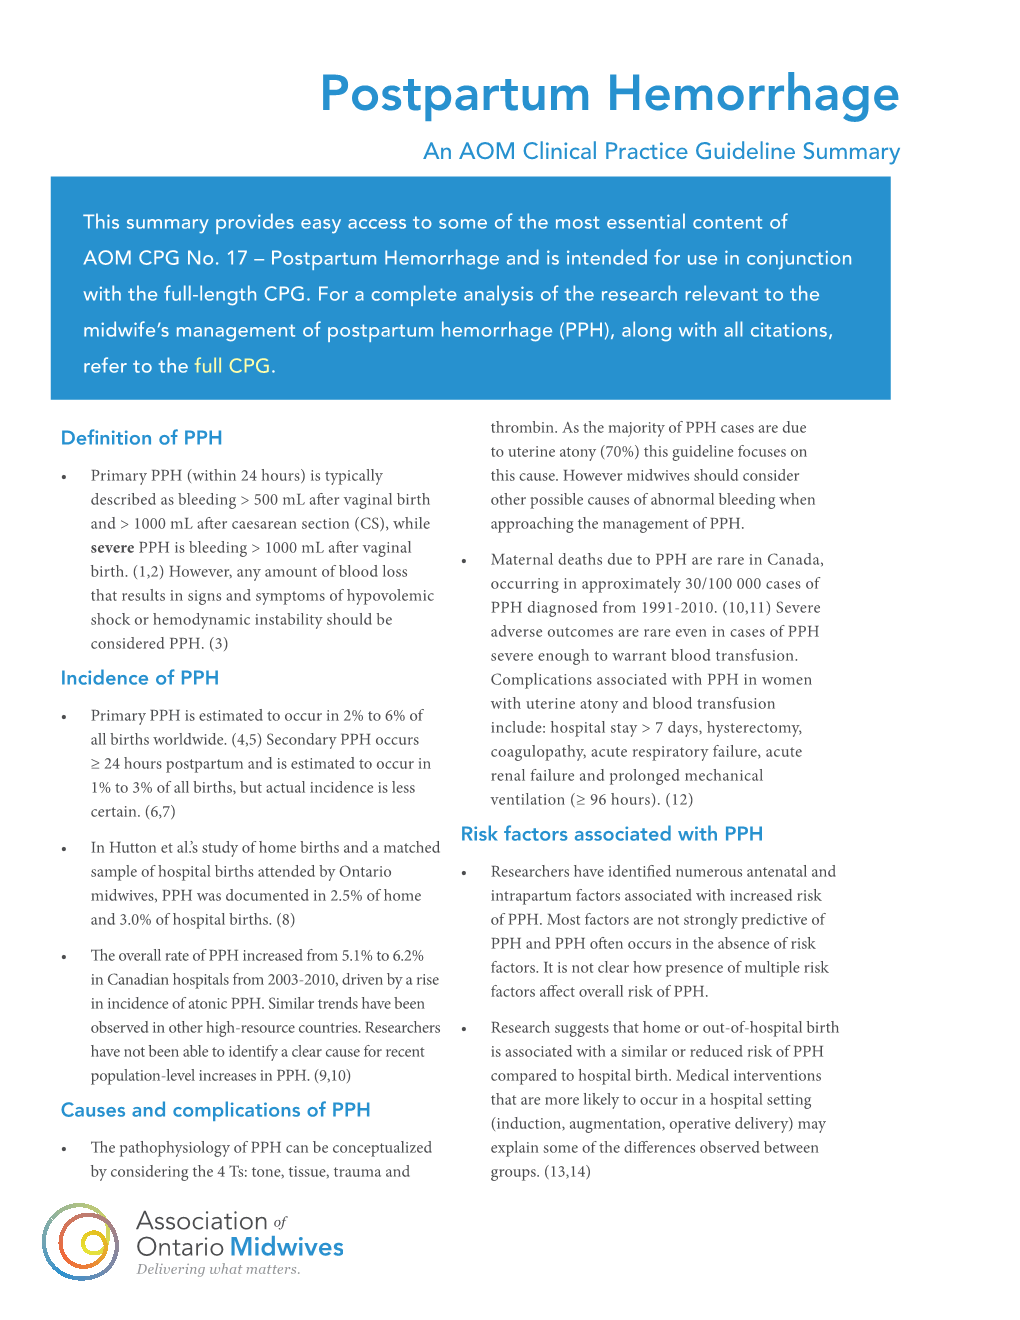 Postpartum Hemorrhage an AOM Clinical Practice Guideline Summary